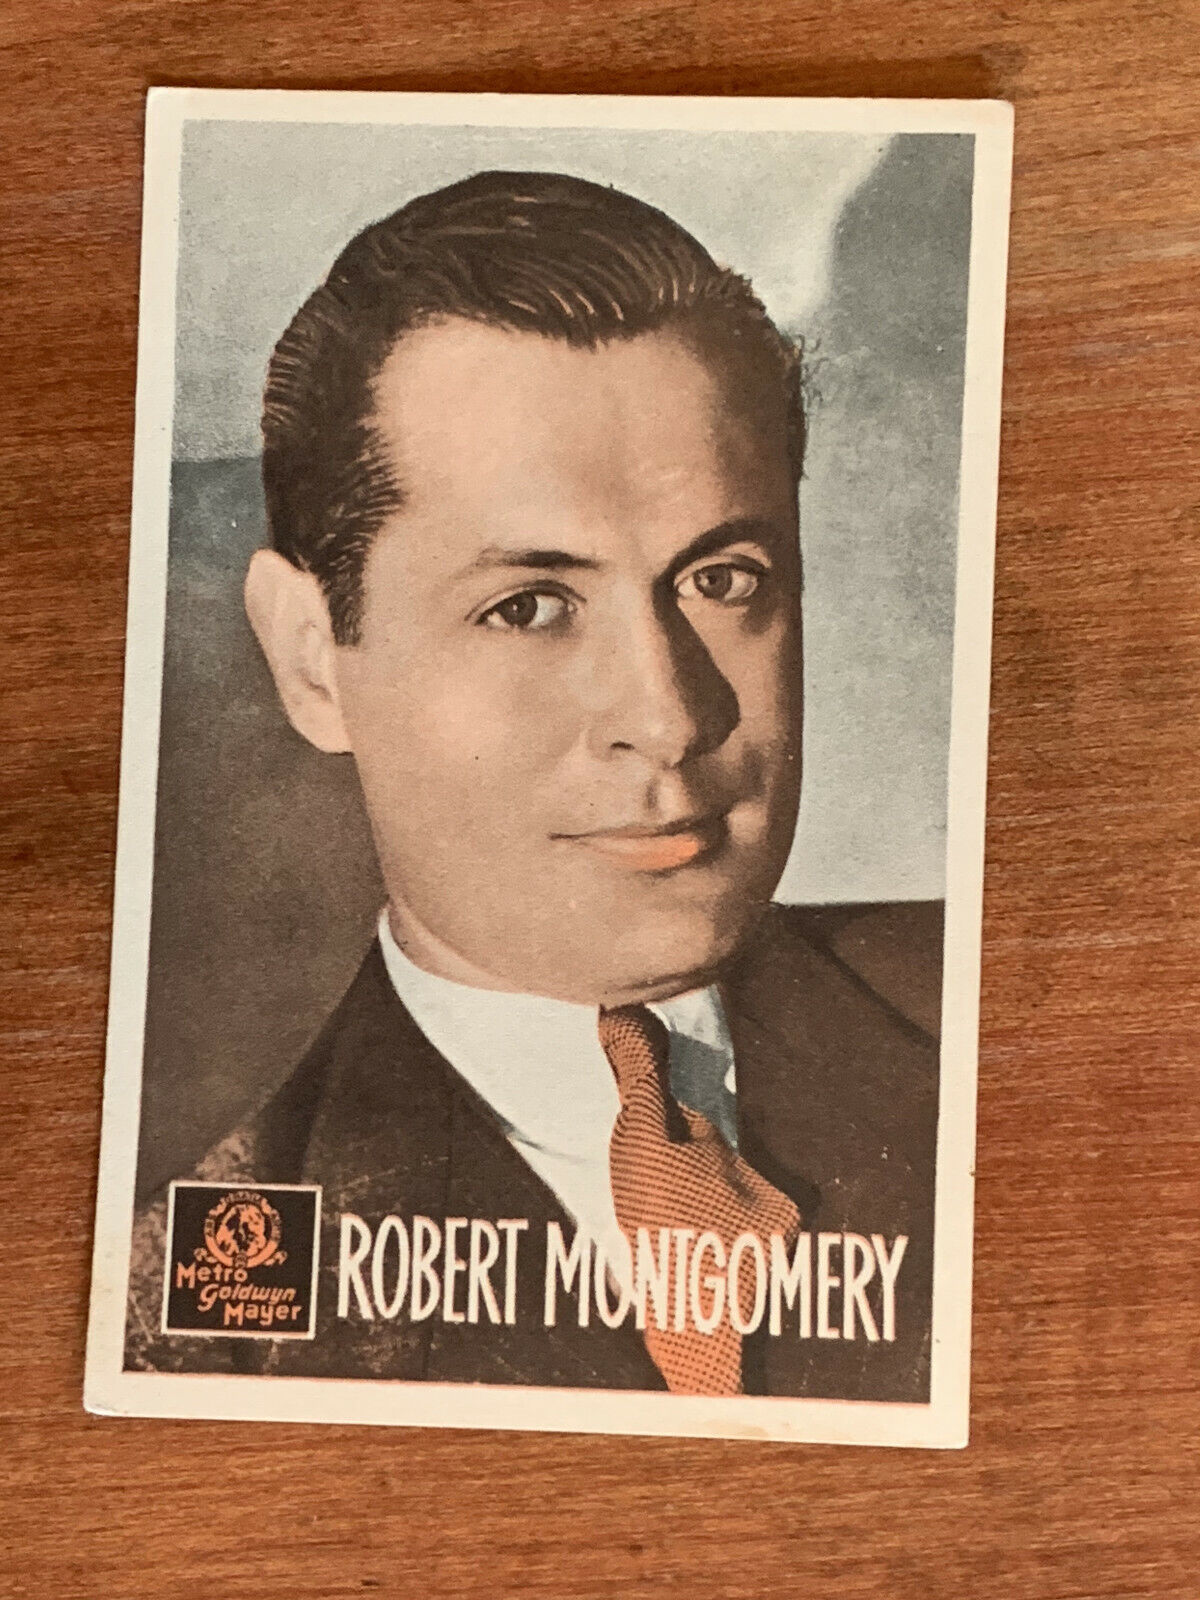 Robert Montgomery, Metro Goldwyn Mayer Movie Star, ca 1940